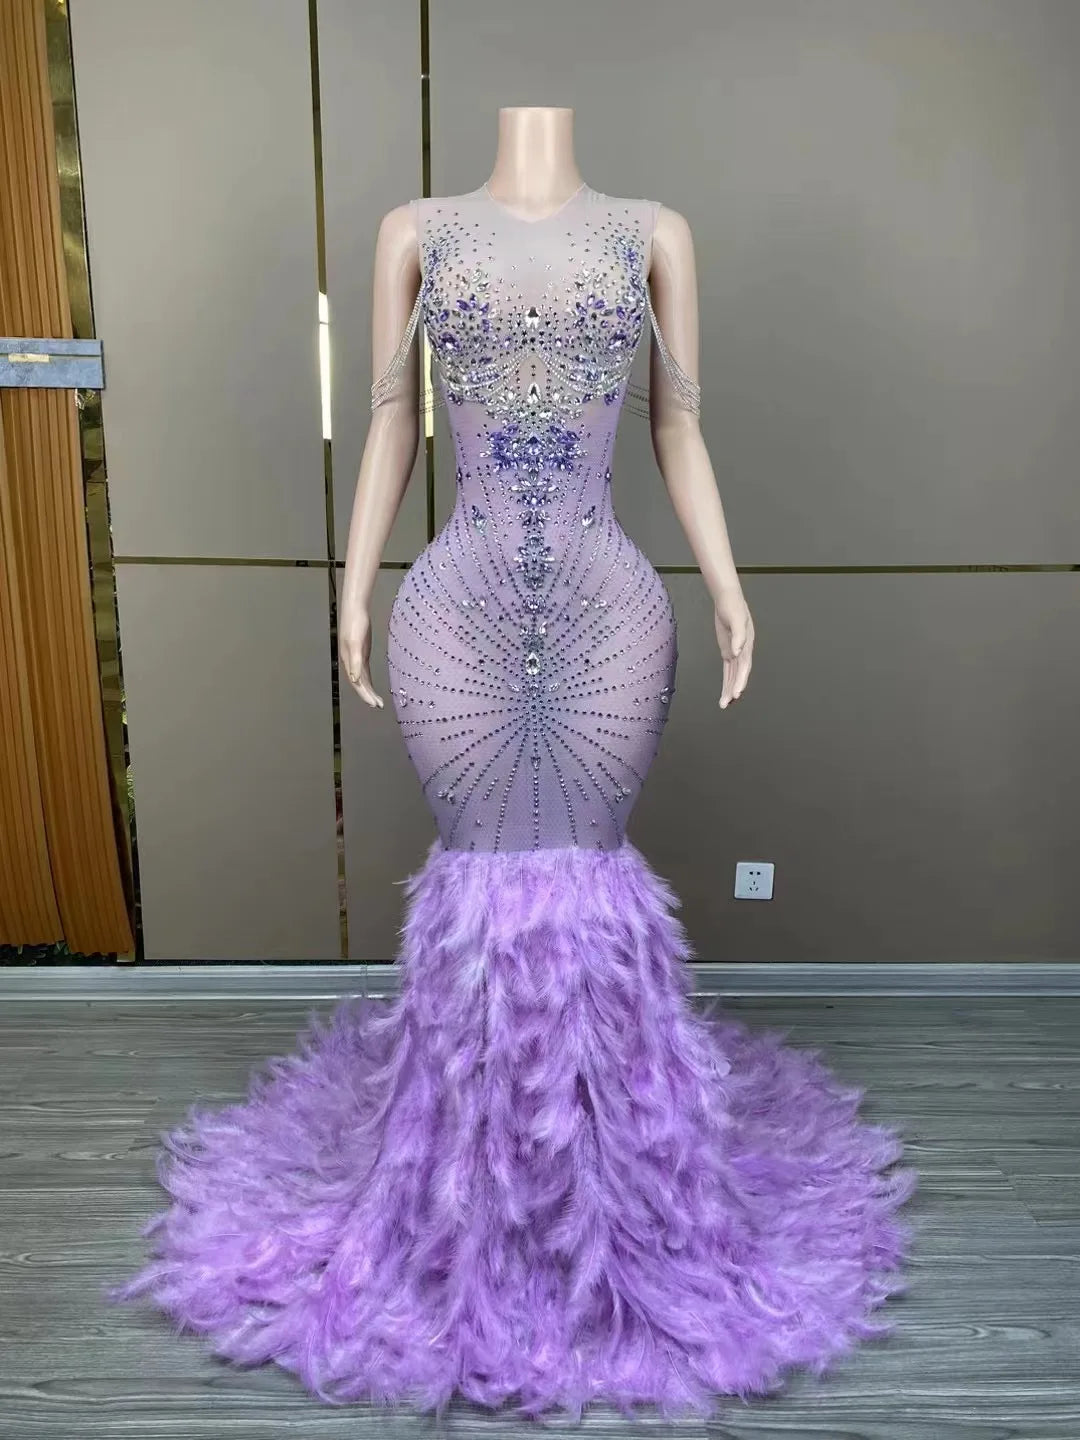 Sparkly Rhinestones Floor Length Purple Feathers Dress Sexy Transparent Birthday Celebrate Evening Prom Dress Photo Shoot Wear